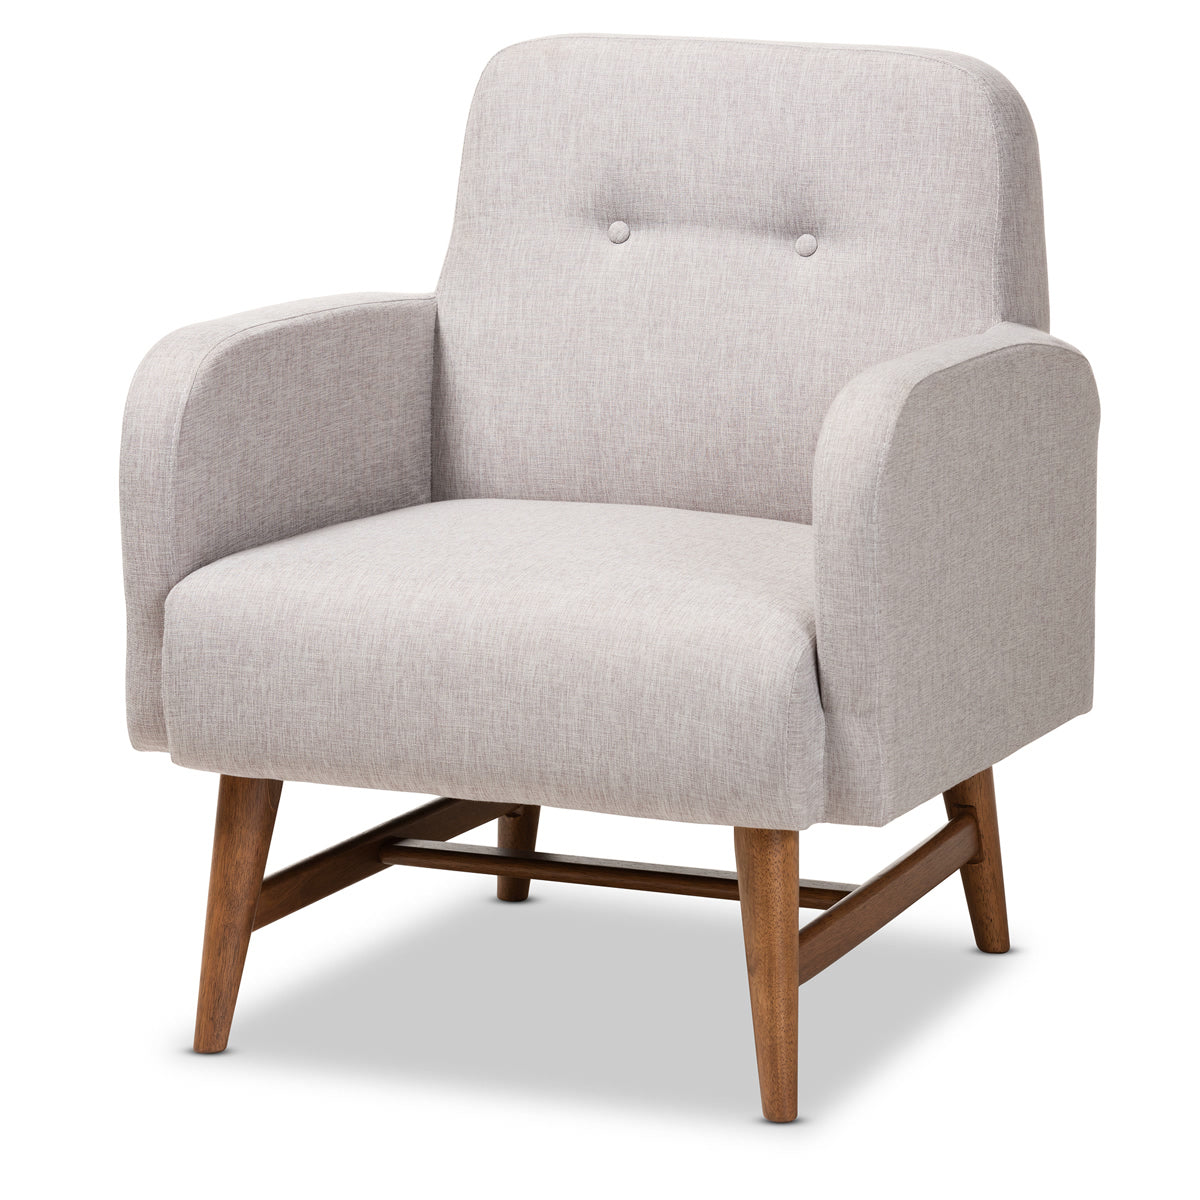 Baxton Studio Perrine Mid-Century Modern Greyish Beige Fabric Upholstered Walnut-Finished Wood Lounge Chair Baxton Studio-chairs-Minimal And Modern - 1